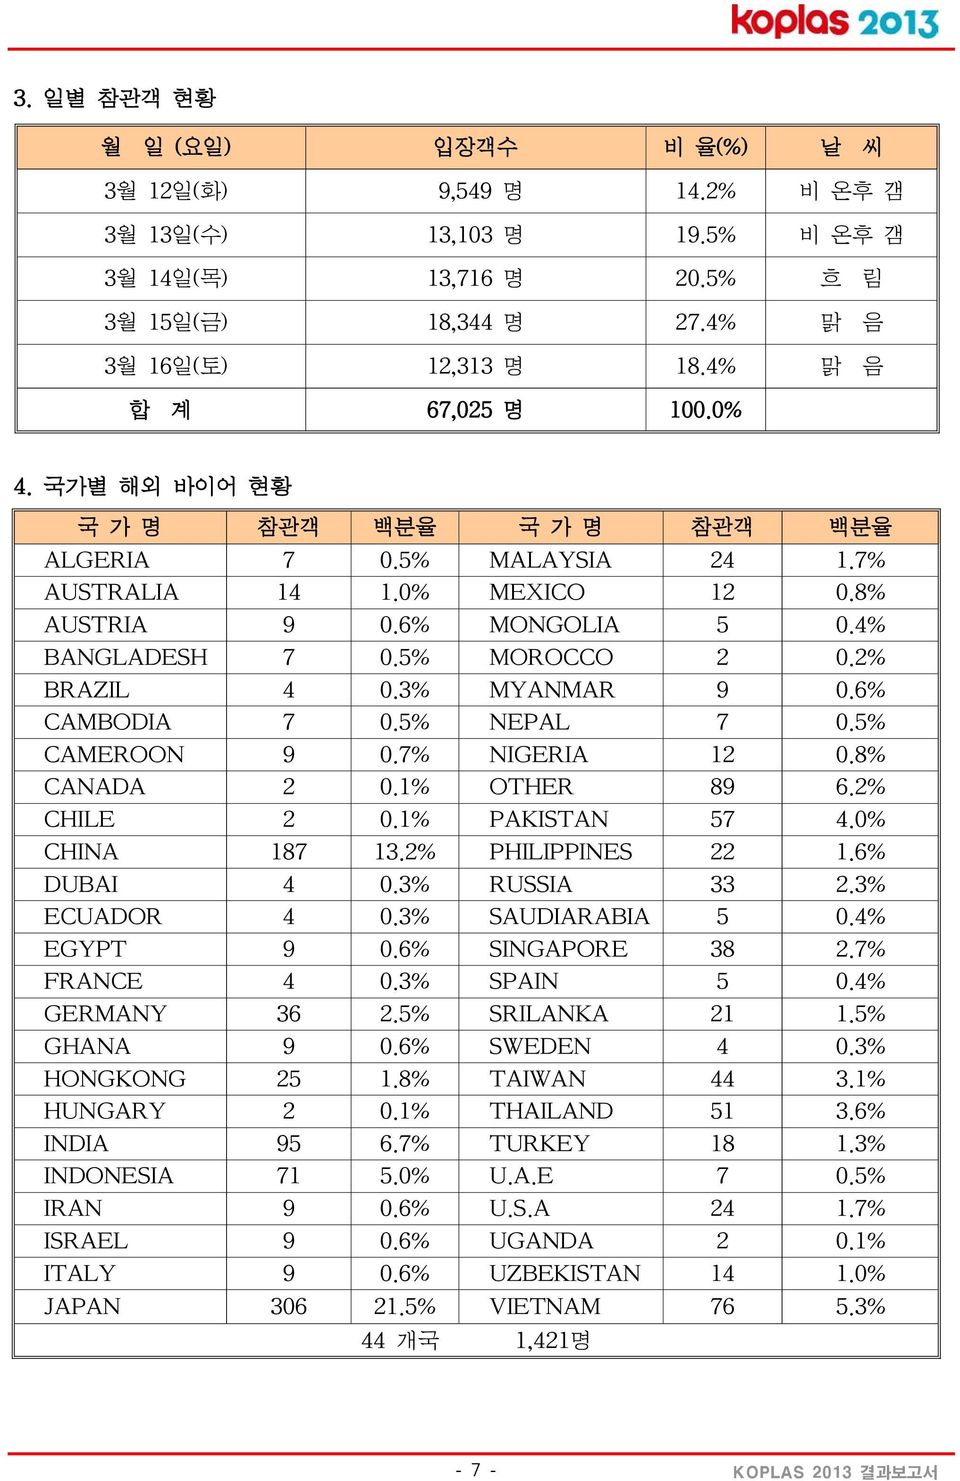 2% BRAZIL 4 0.3% MYANMAR 9 0.6% CAMBODIA 7 0.5% NEPAL 7 0.5% CAMEROON 9 0.7% NIGERIA 12 0.8% CANADA 2 0.1% OTHER 89 6.2% CHILE 2 0.1% PAKISTAN 57 4.0% CHINA 187 13.2% PHILIPPINES 22 1.6% DUBAI 4 0.